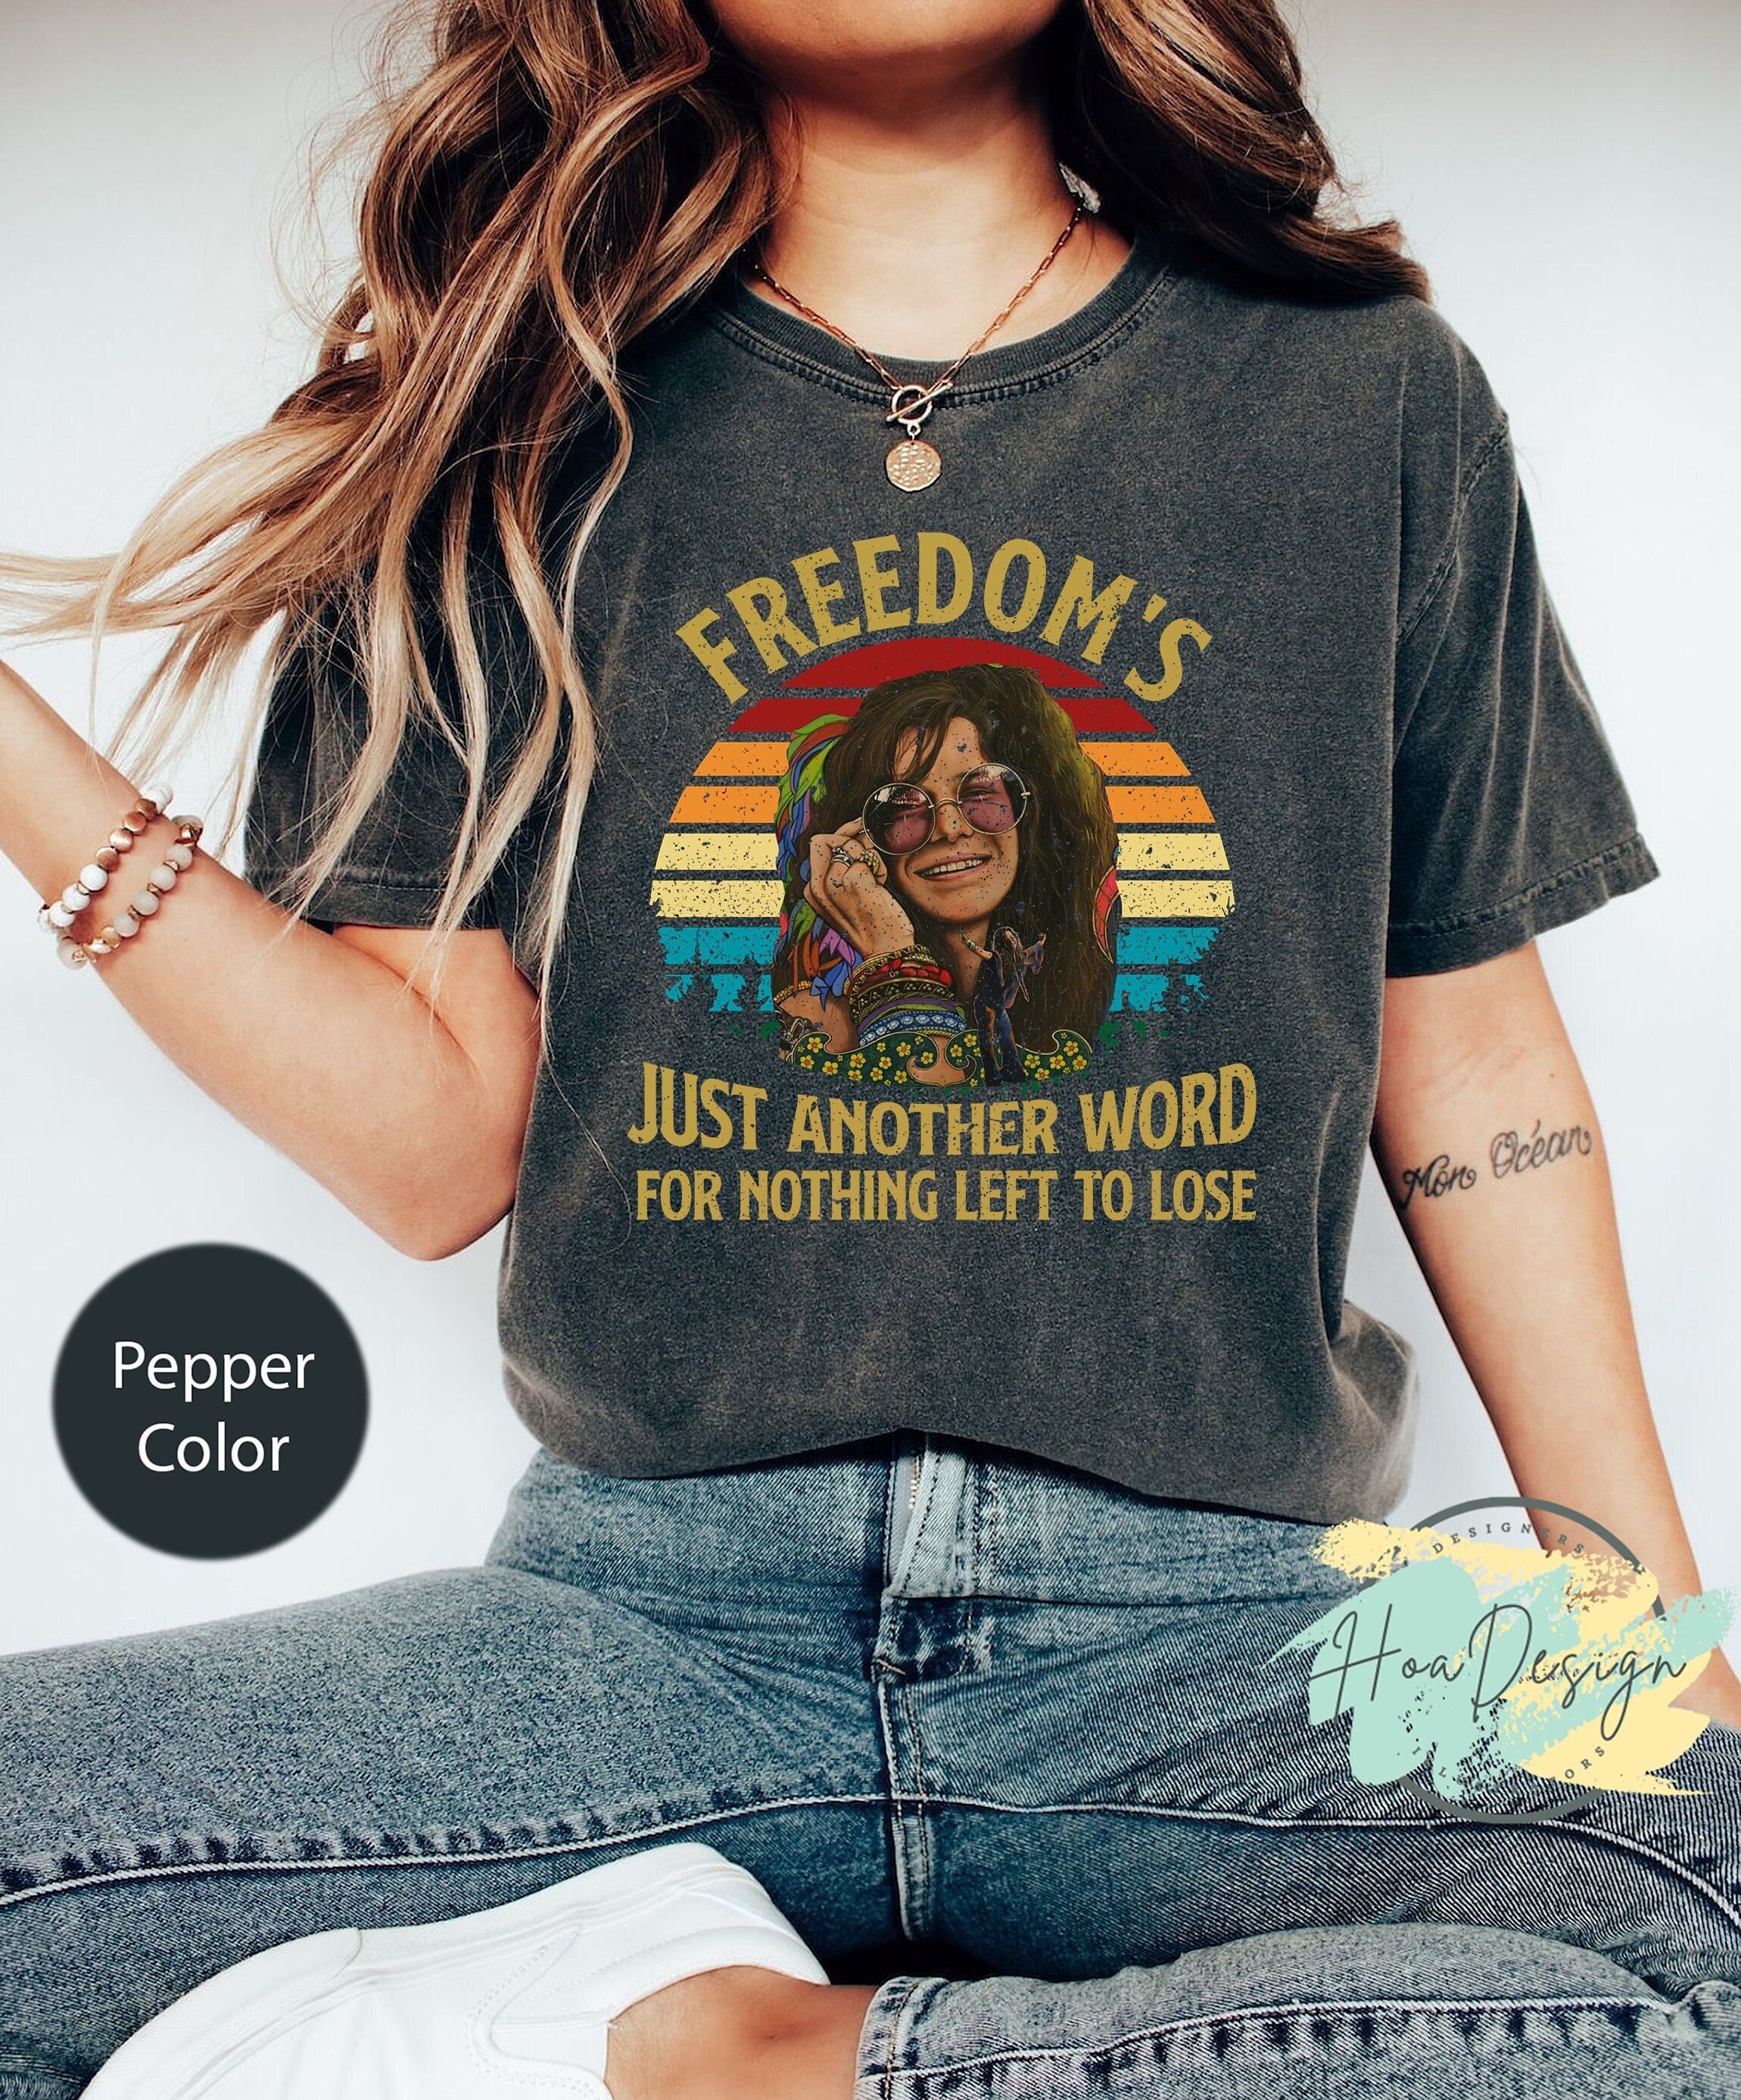 Janis Joplin Concert Poster Women's Vintage Fashion T-Shirt by Sandrine Rose